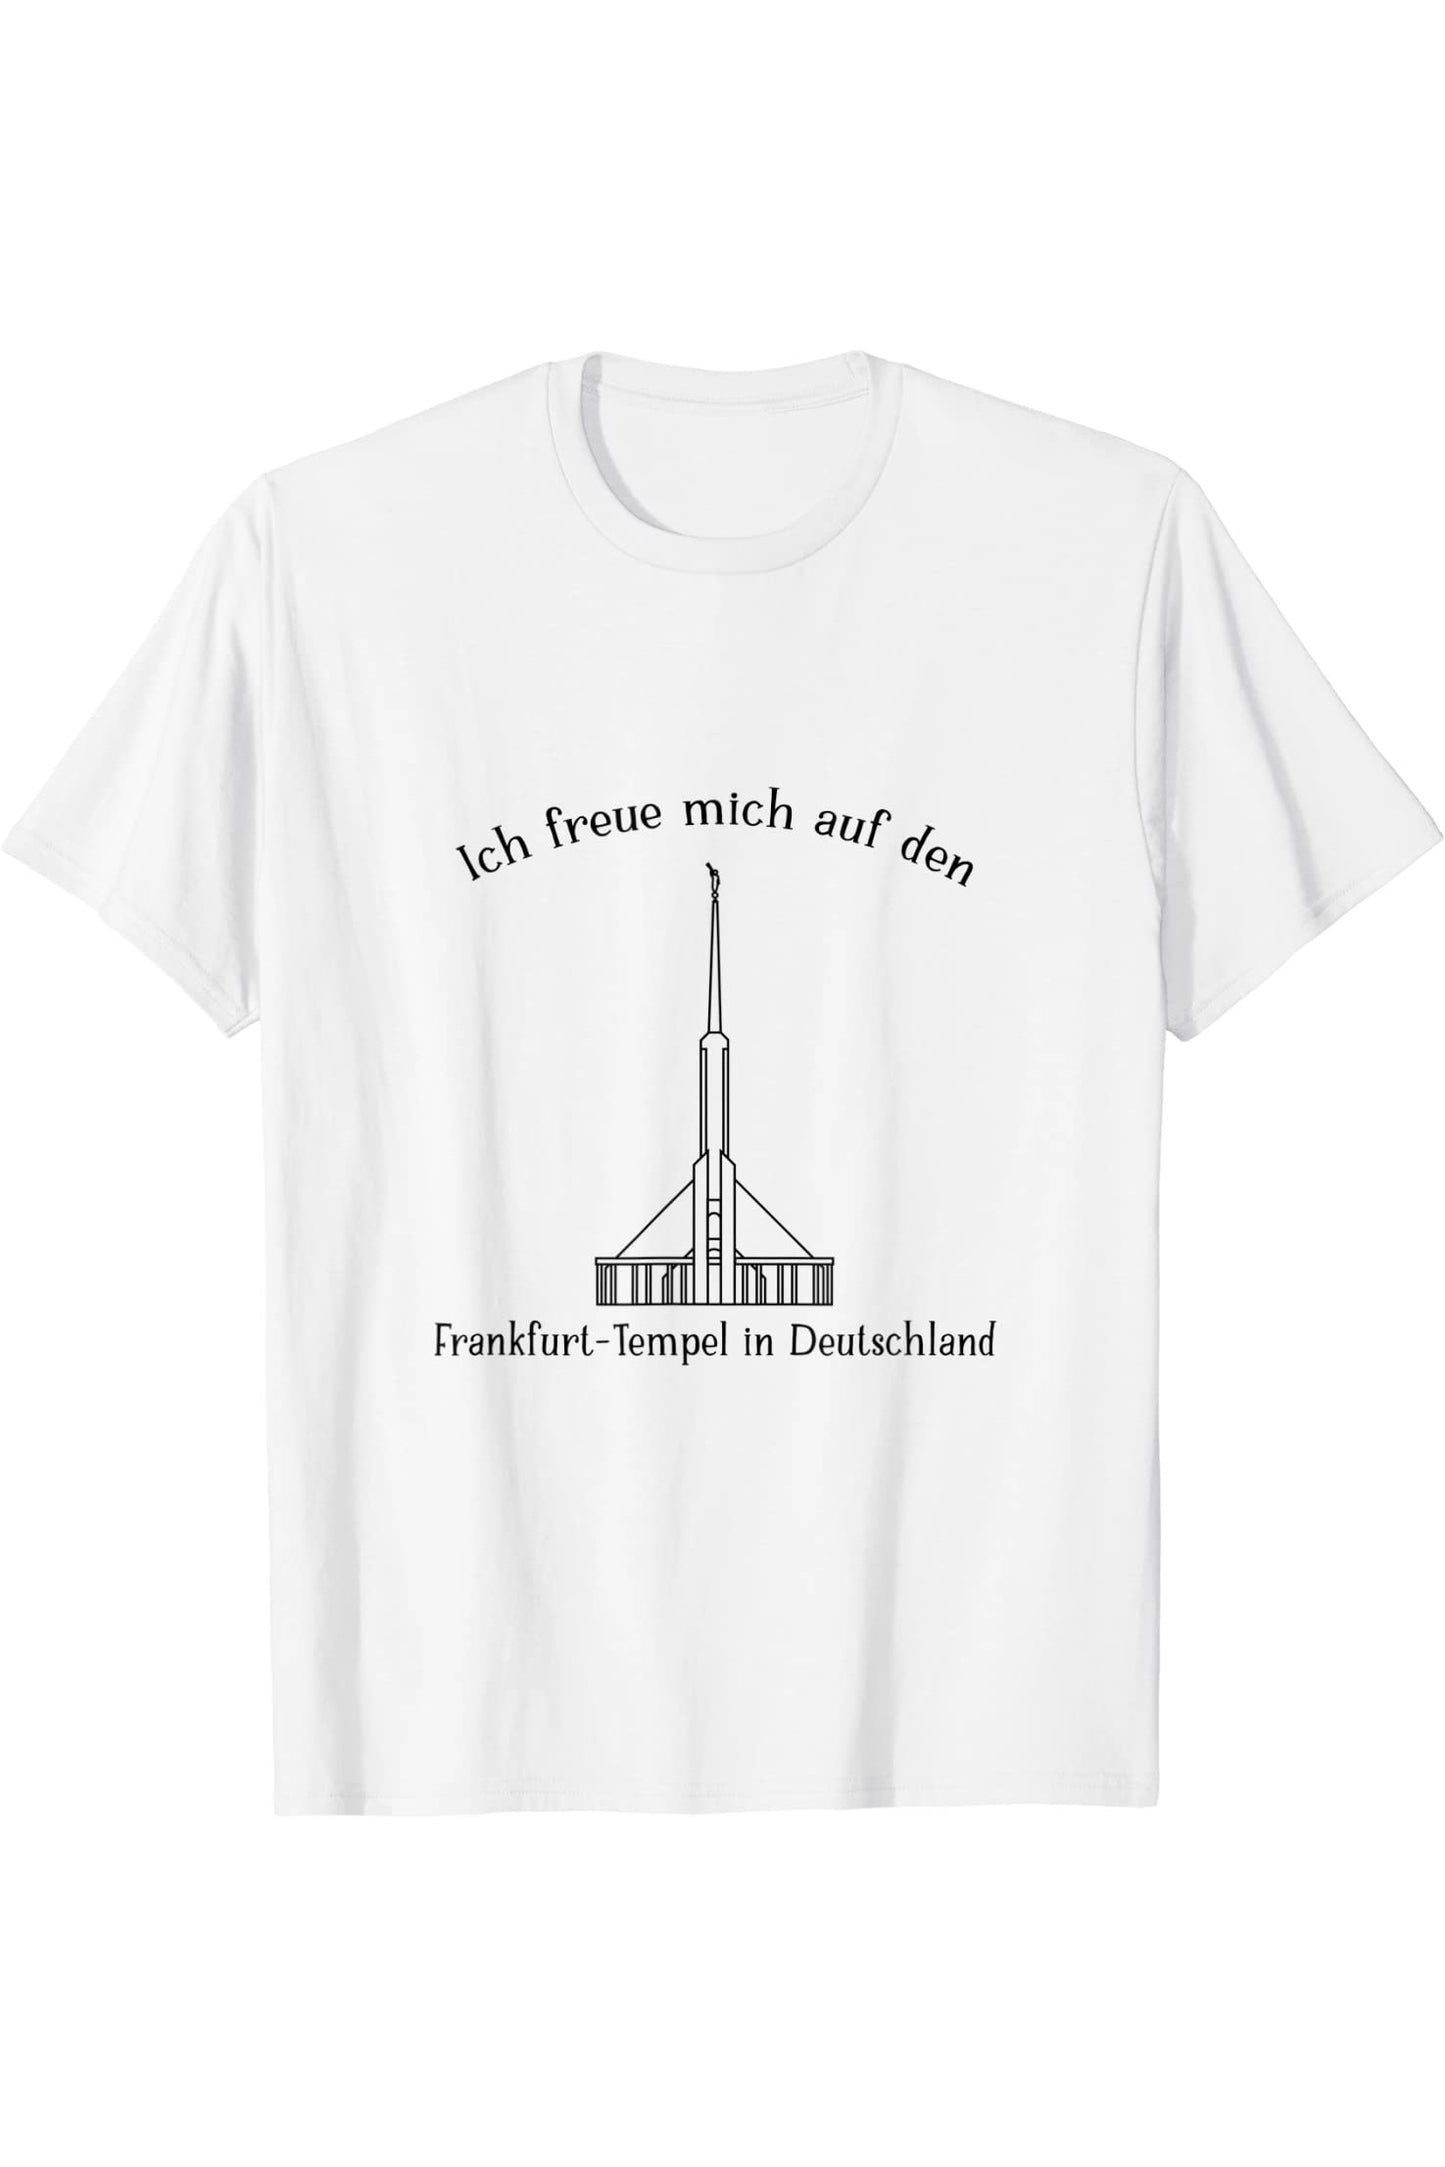 abundante templo de Utah, me encanta ver mi templo (alemán) T-Shirt